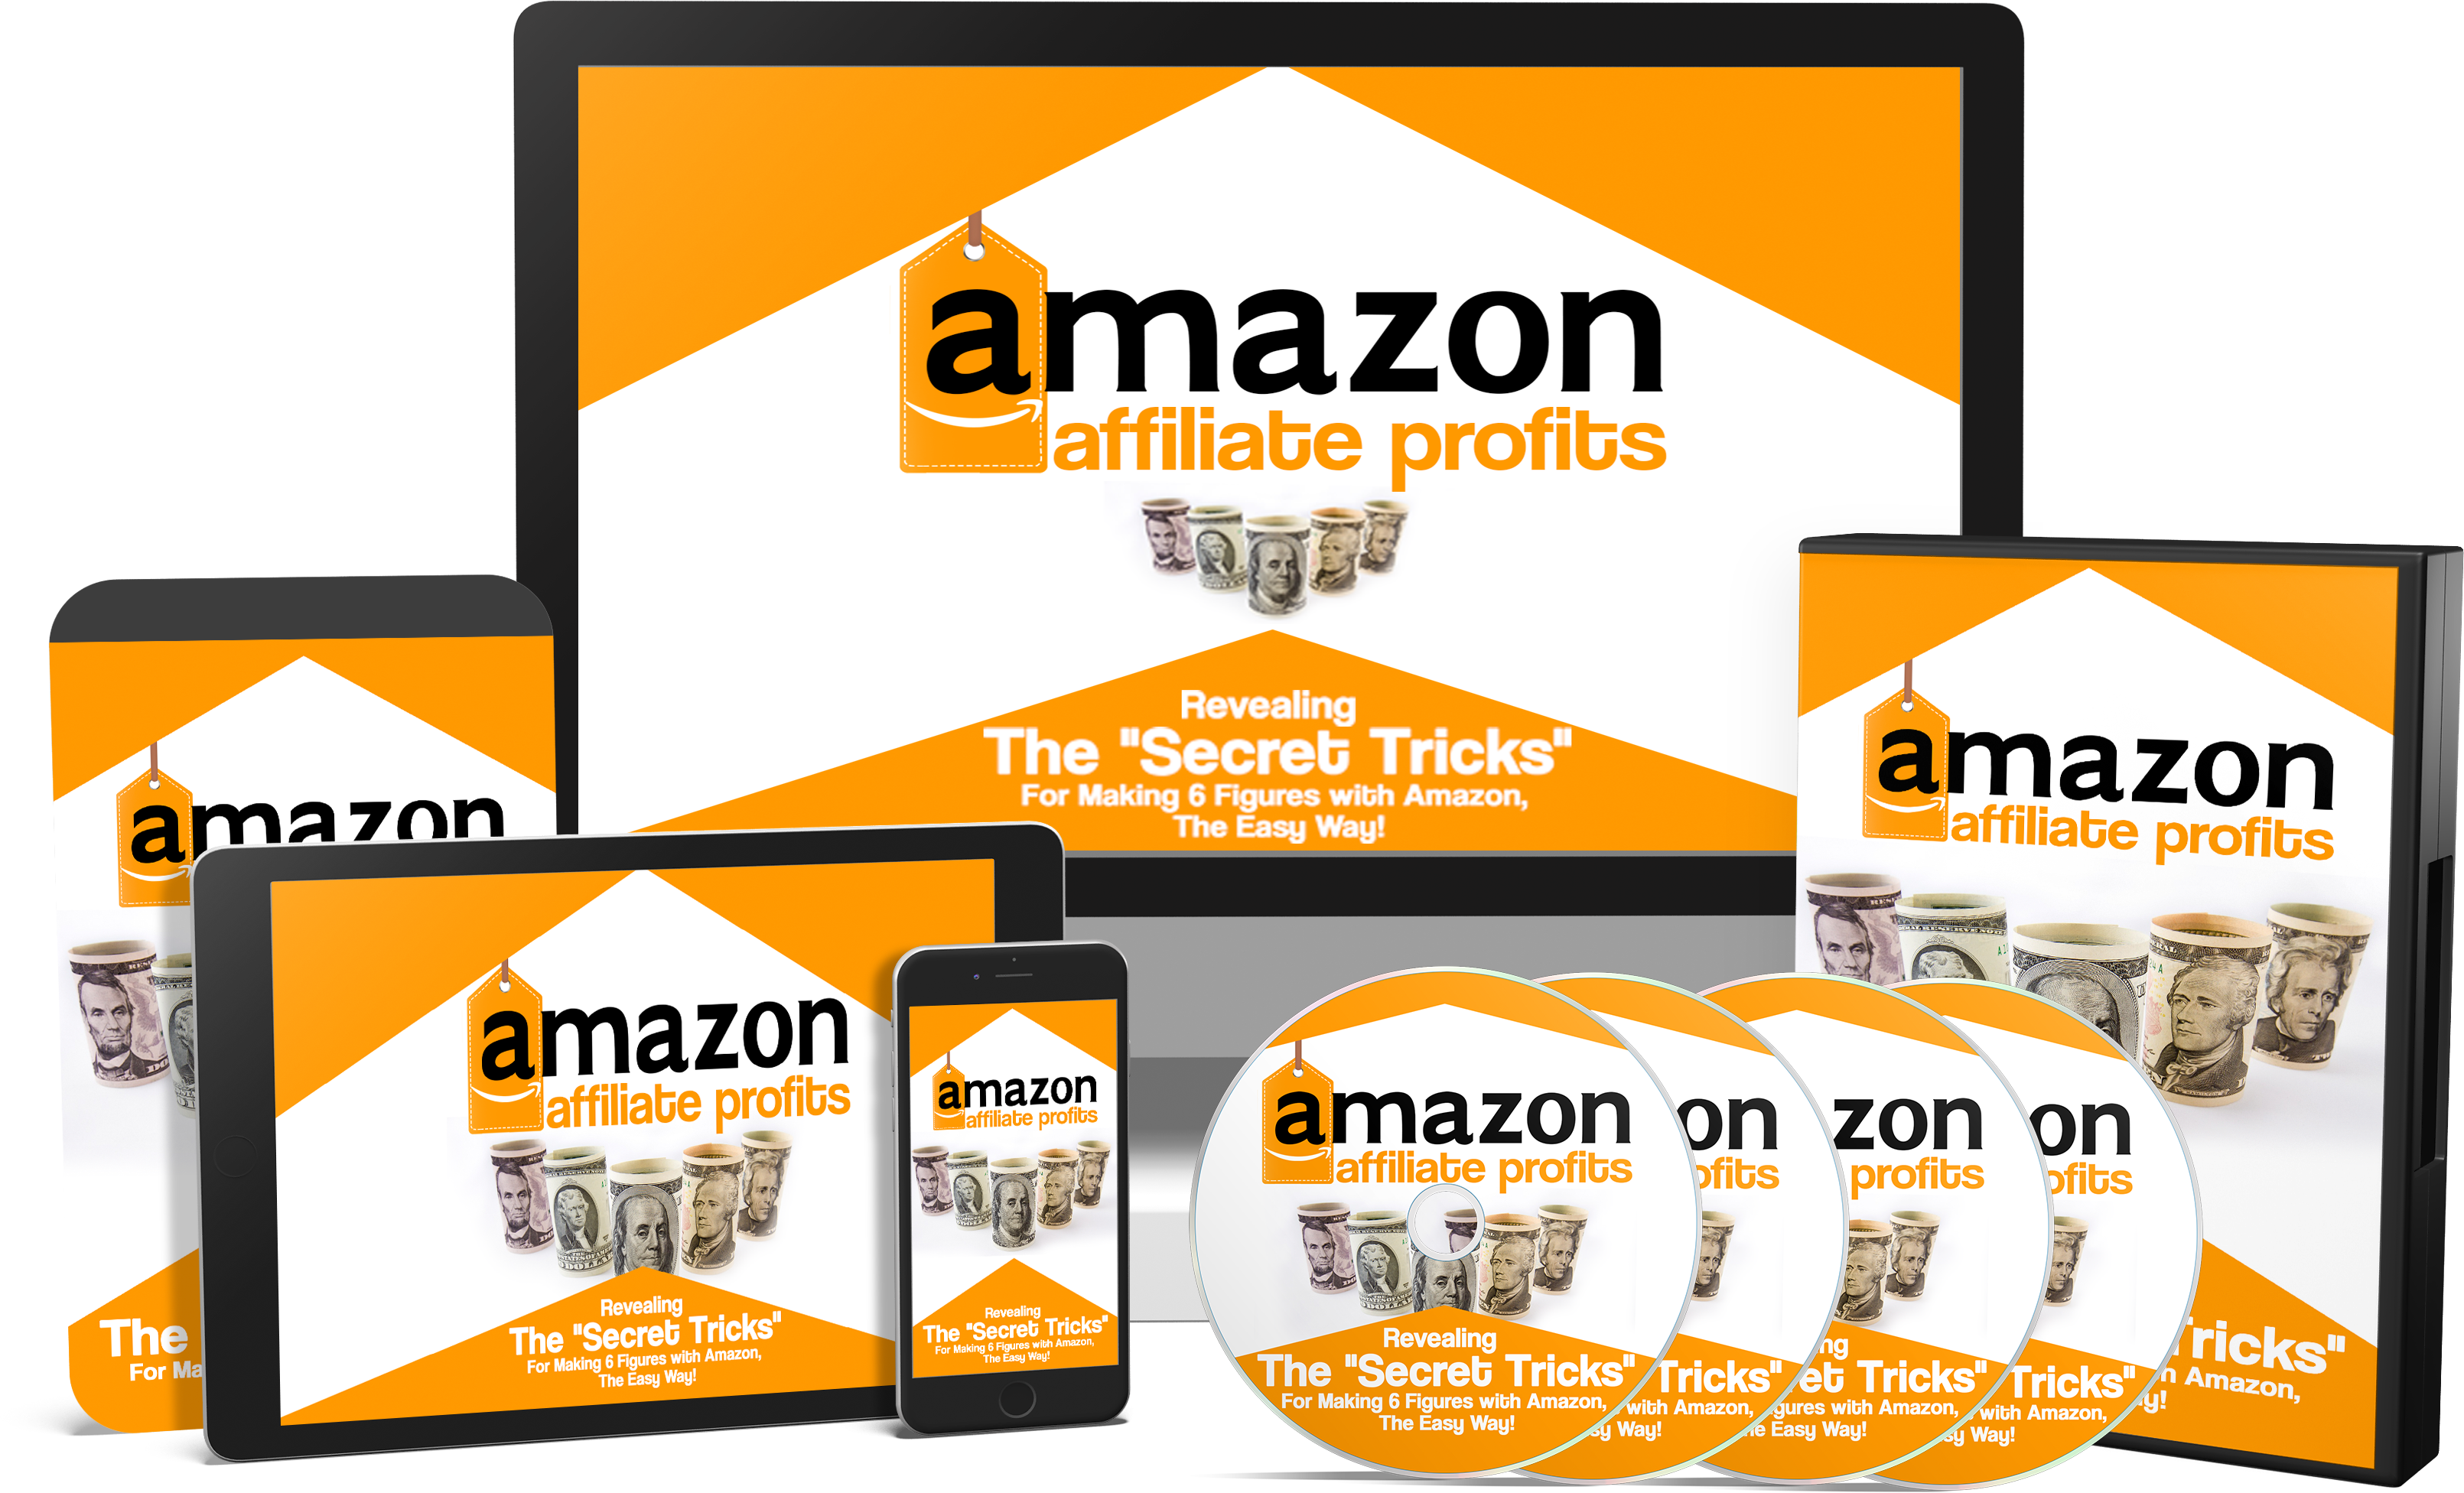 Amazon Affiliate Profits | Small Business Marketing Society